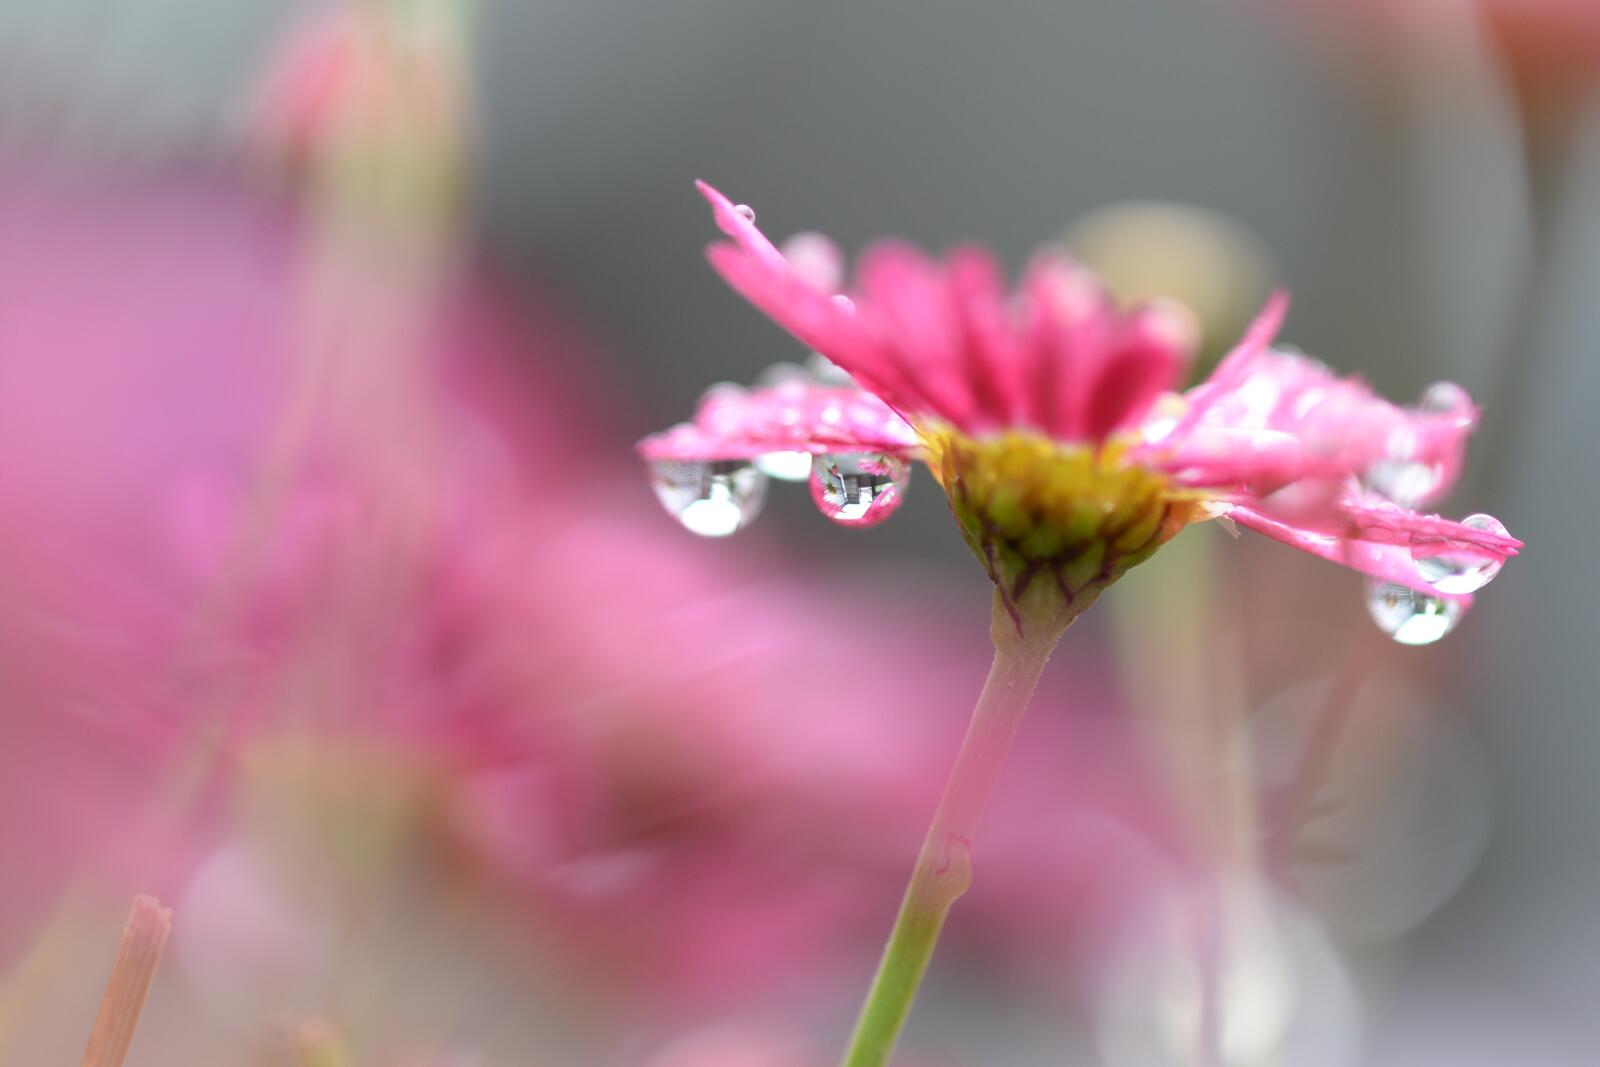 Wallpapers wallpaper pink flower drops of water blurred on the desktop